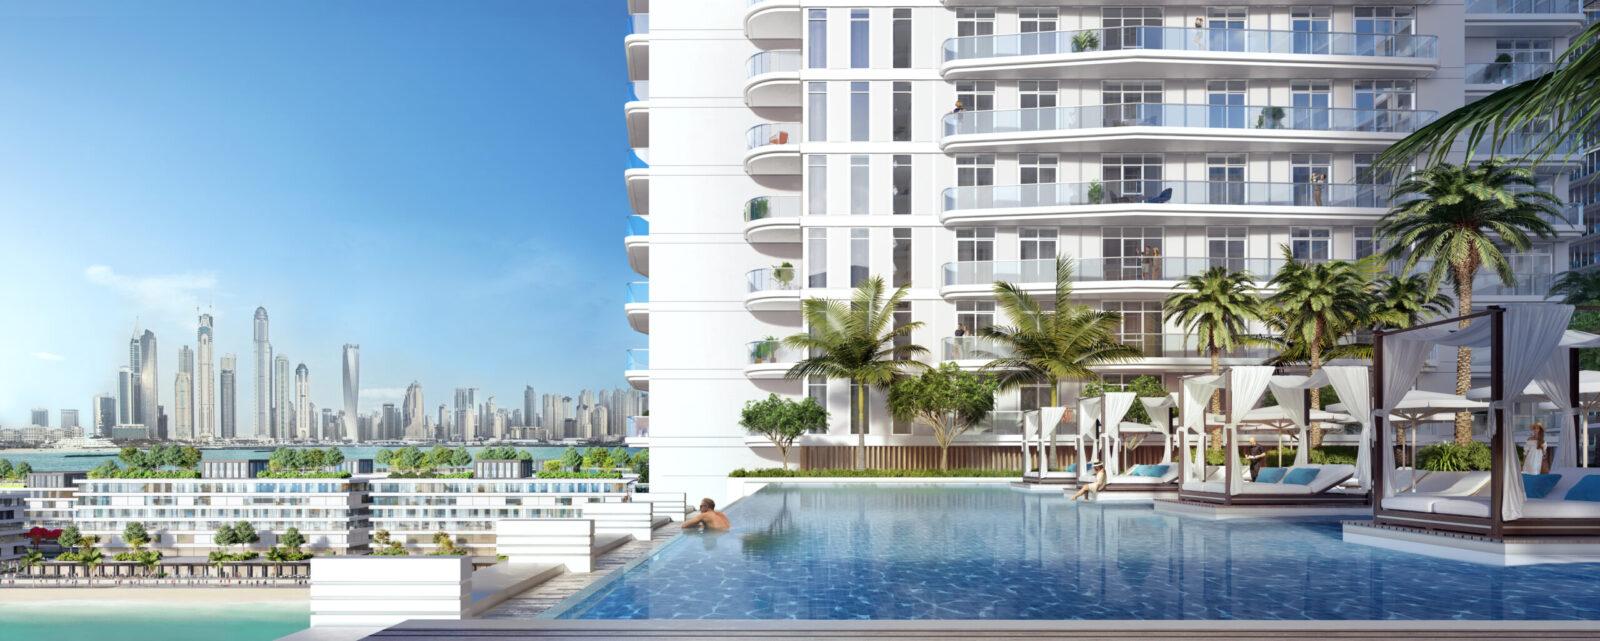 Beachfront Palm Jumeirah appartamenti con piscina